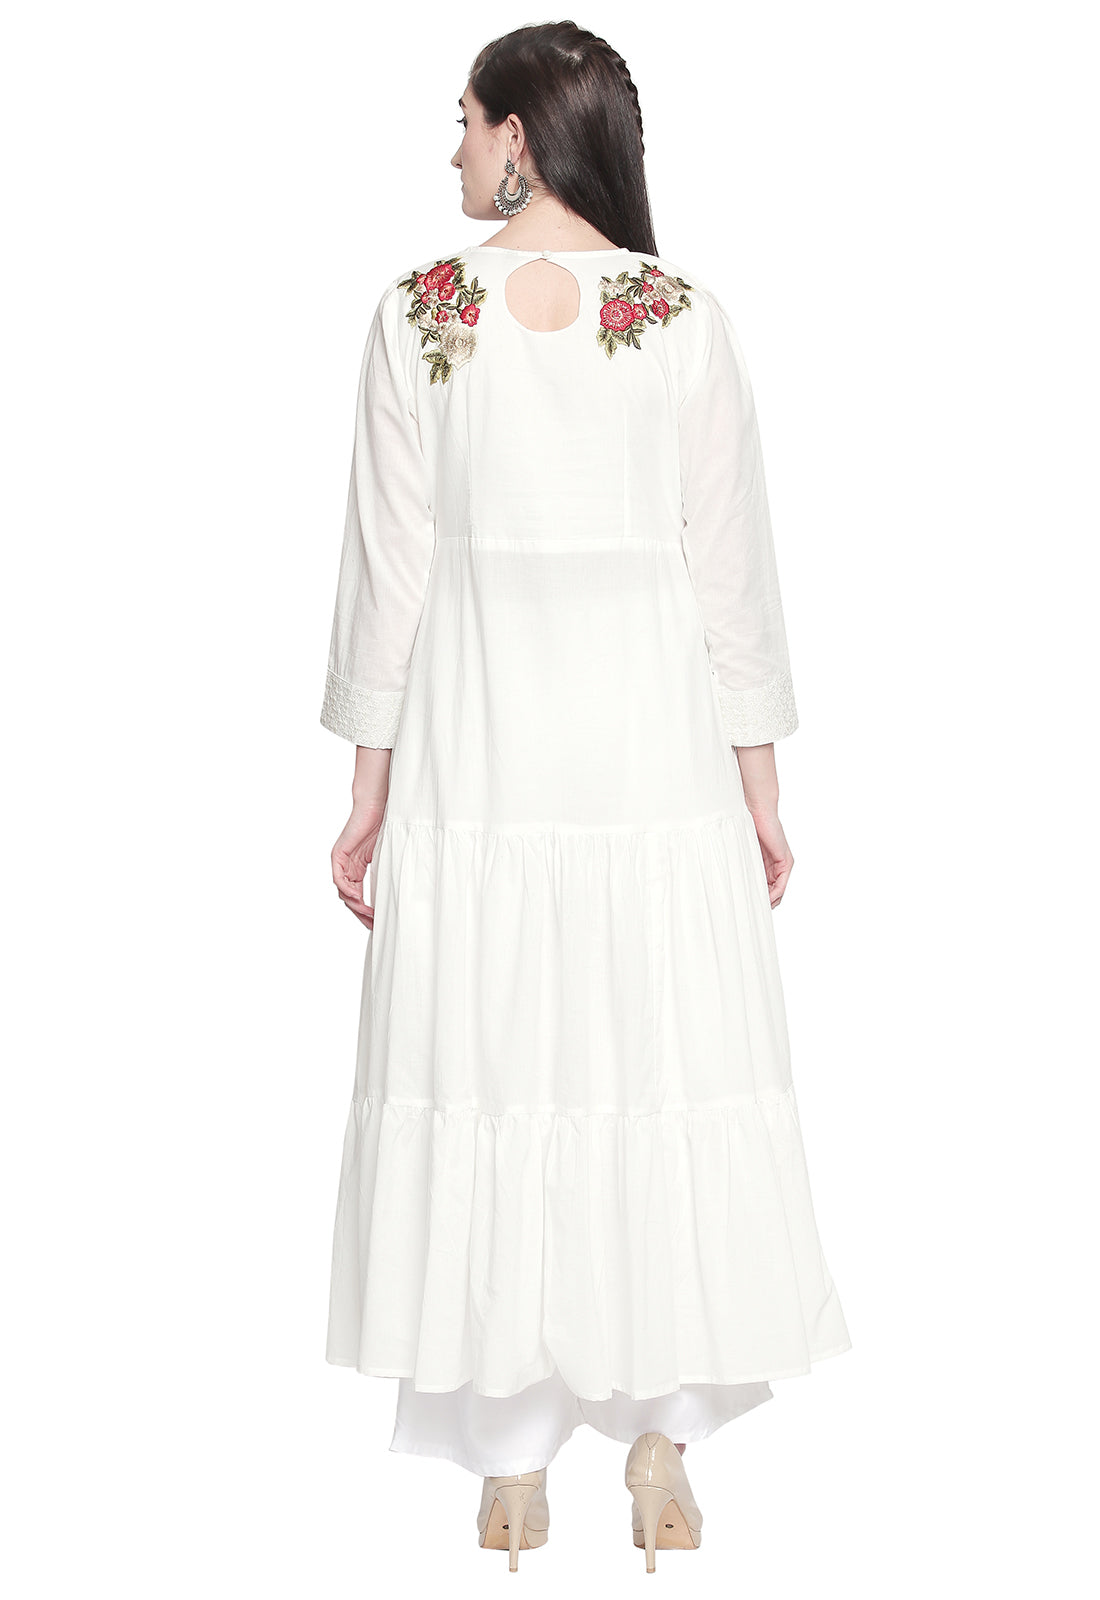 Ishin Women's Cotton White Embroidered Anarkali Kurta Palazzo Set